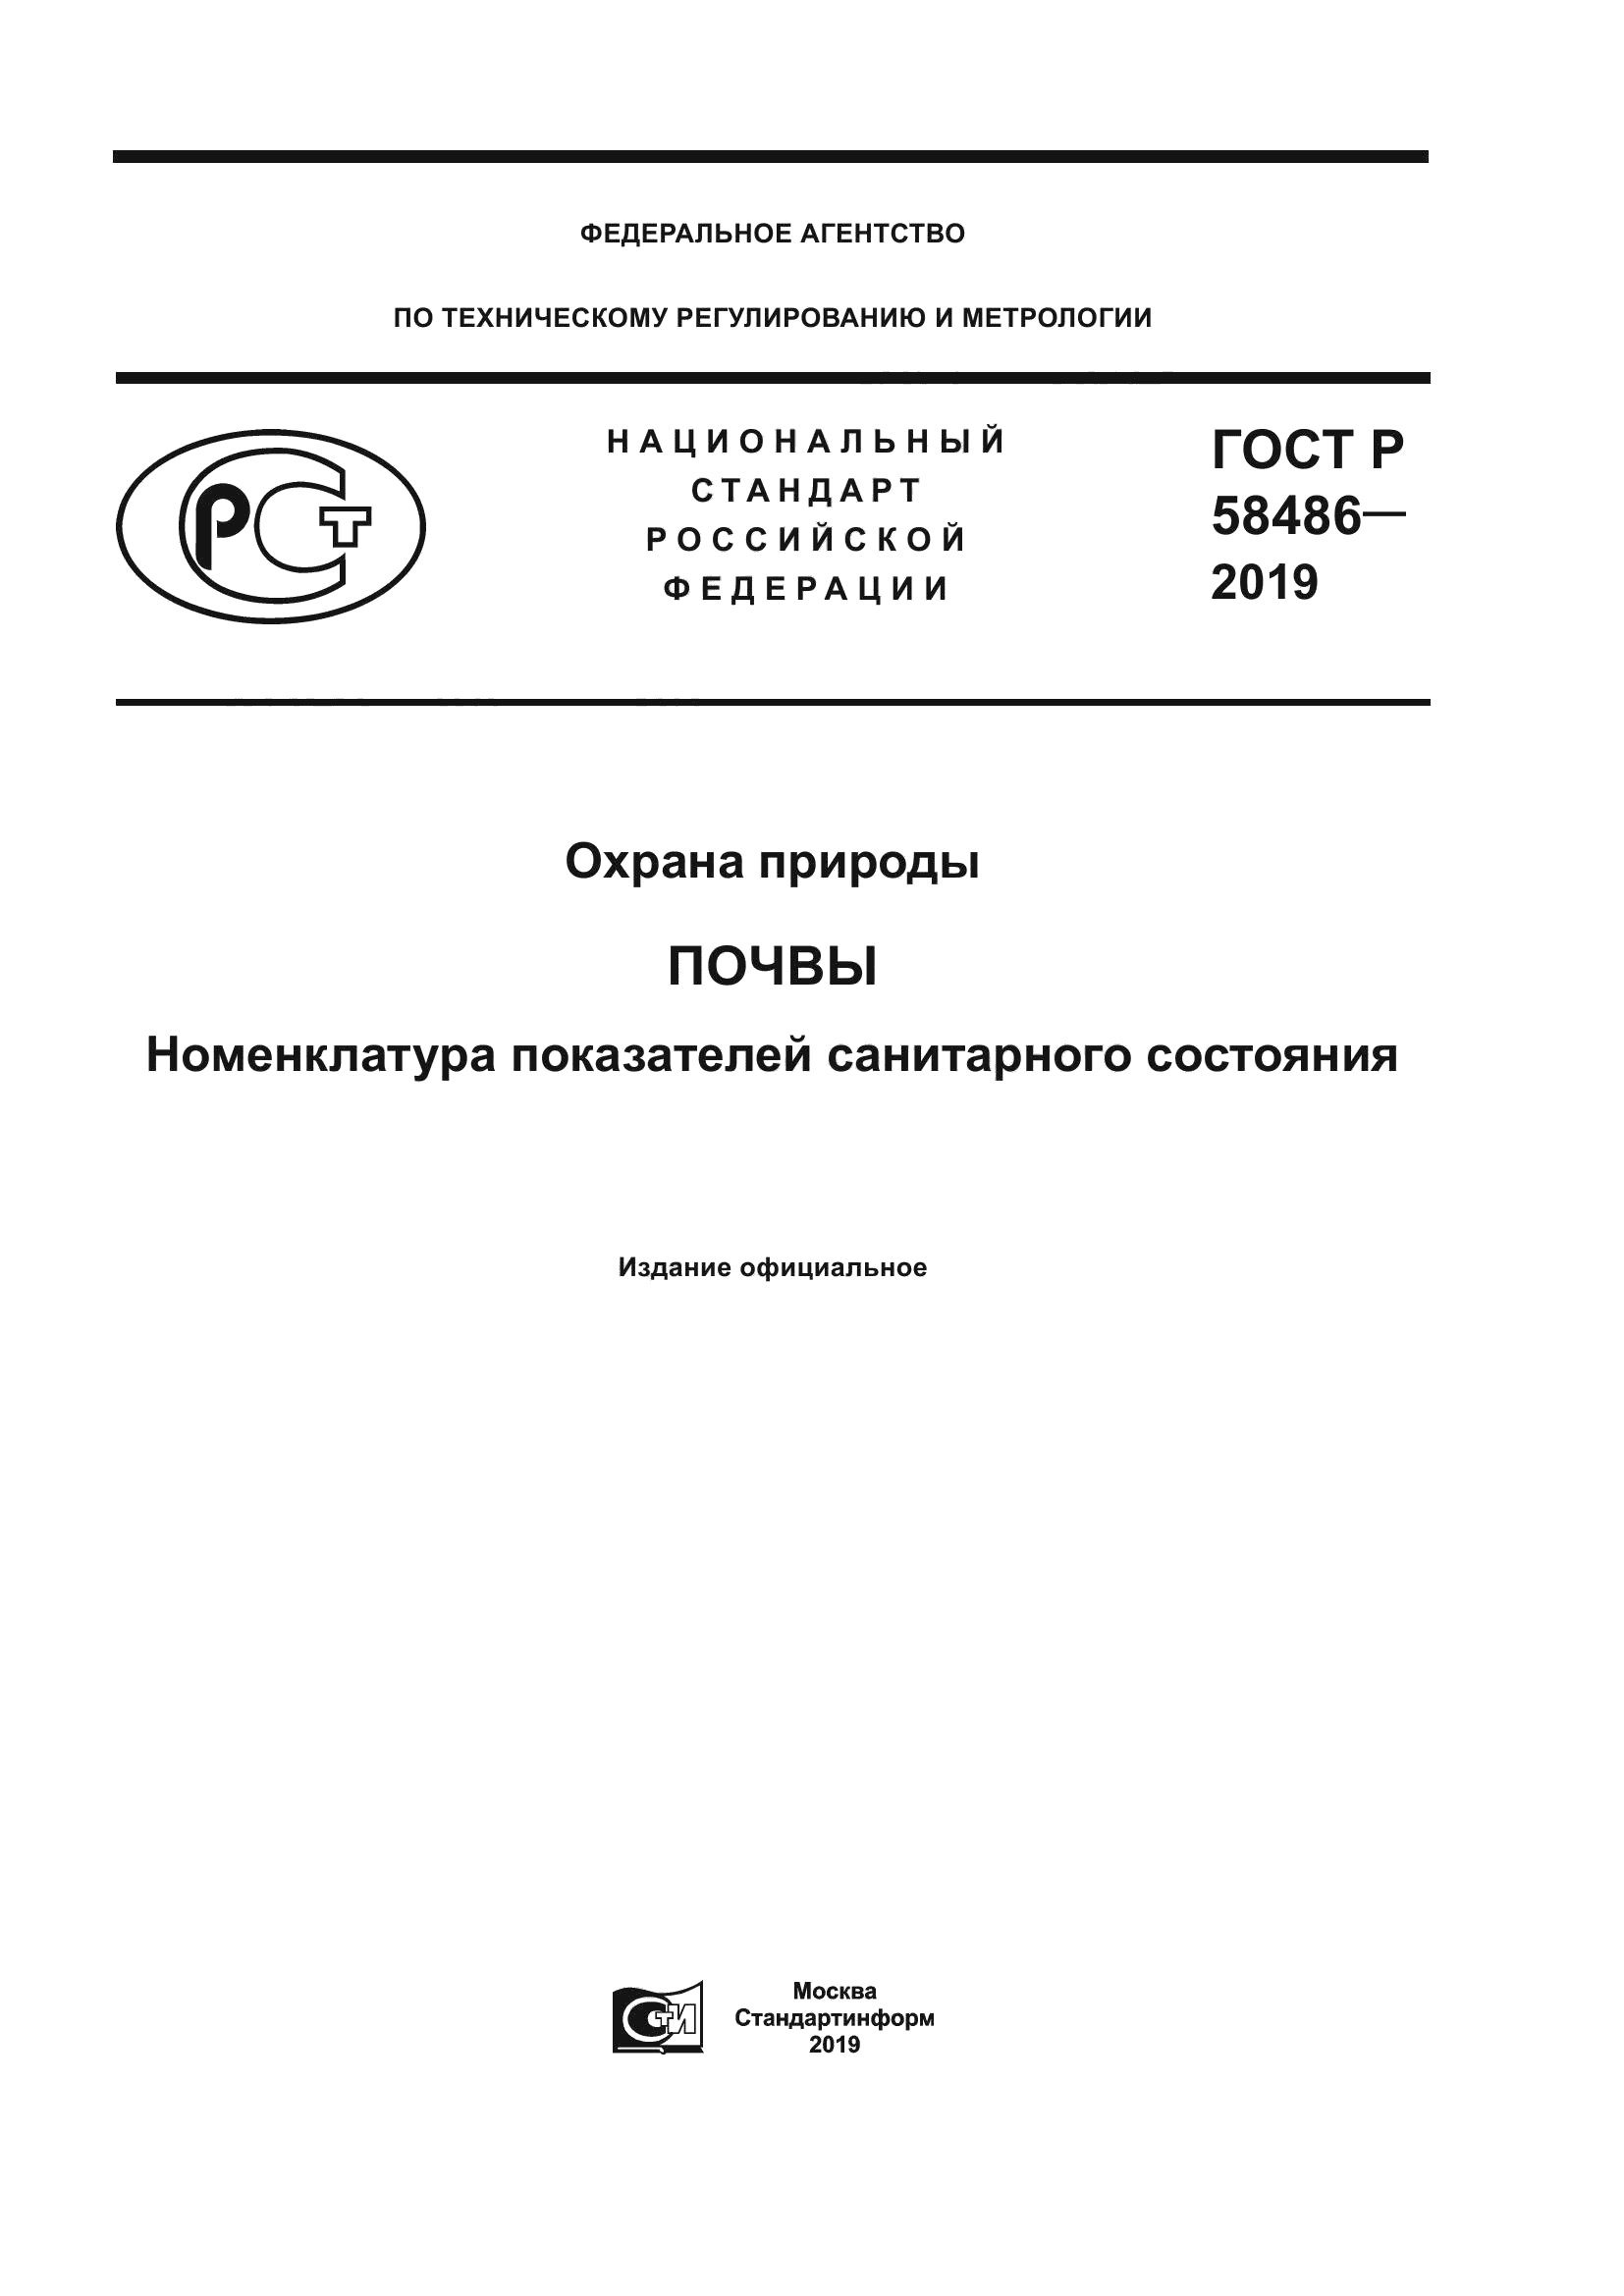 ГОСТ Р 58486-2019